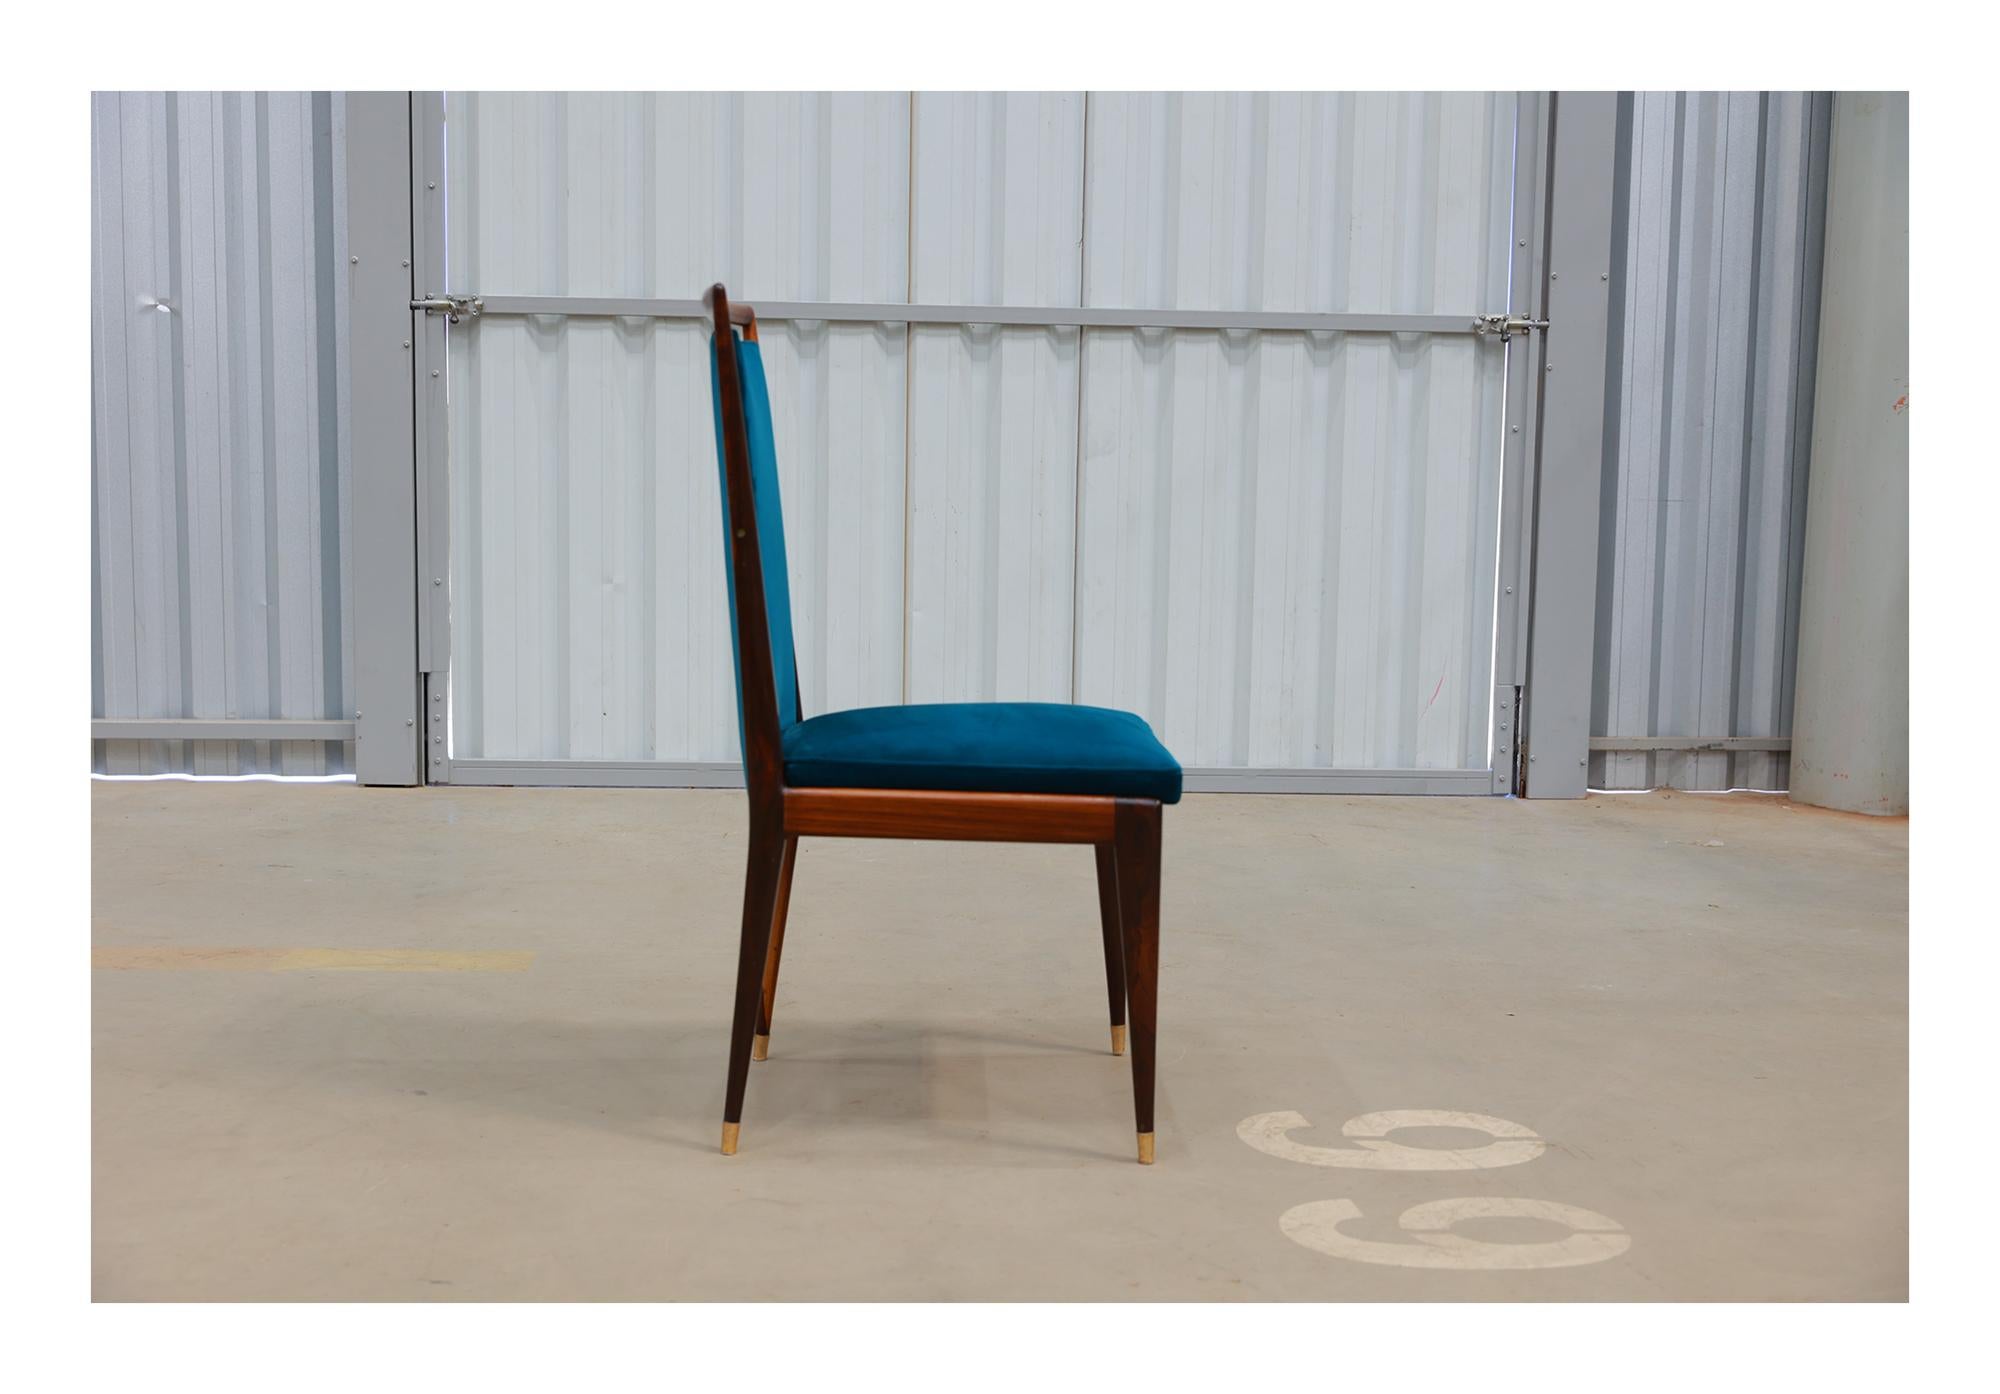 Brazilian Modern 8 Chair Set in Hardwood & Fabric, Giuseppe Scapinelli, c. 1950 For Sale 2